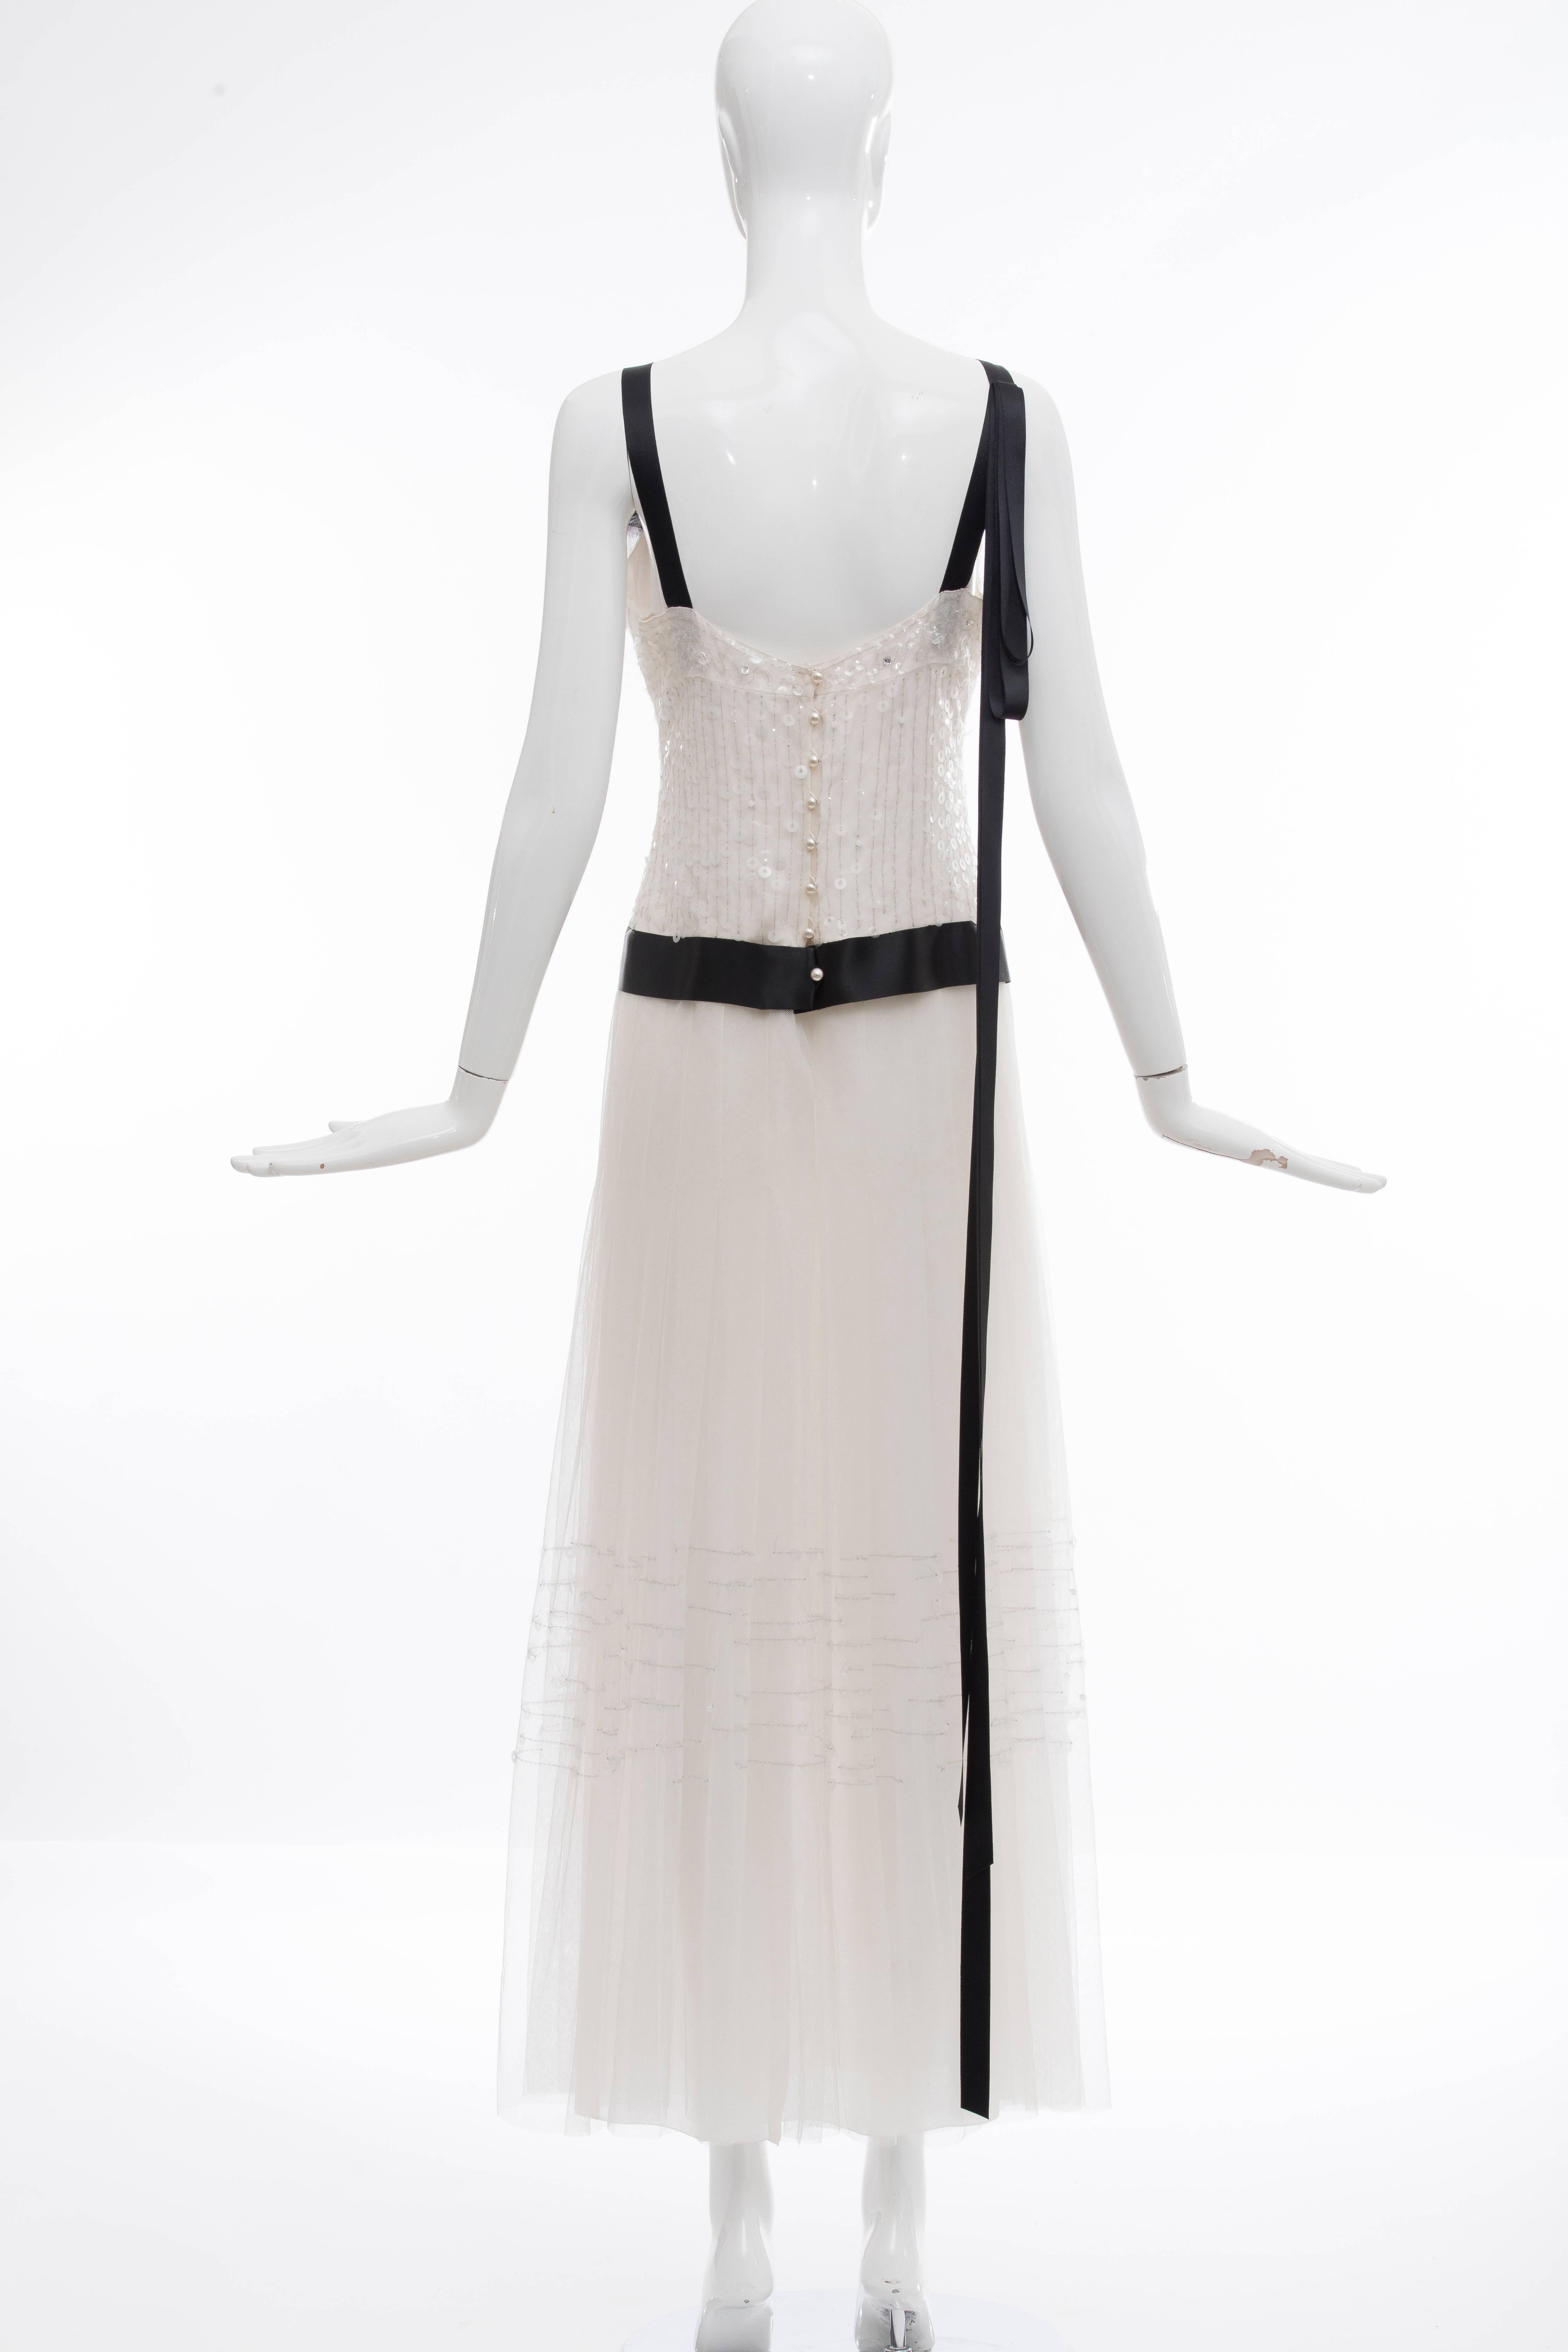 Women's Chanel White Nylon Mesh Sequins Pearls Black Satin Evening Dress, Cruise 2005